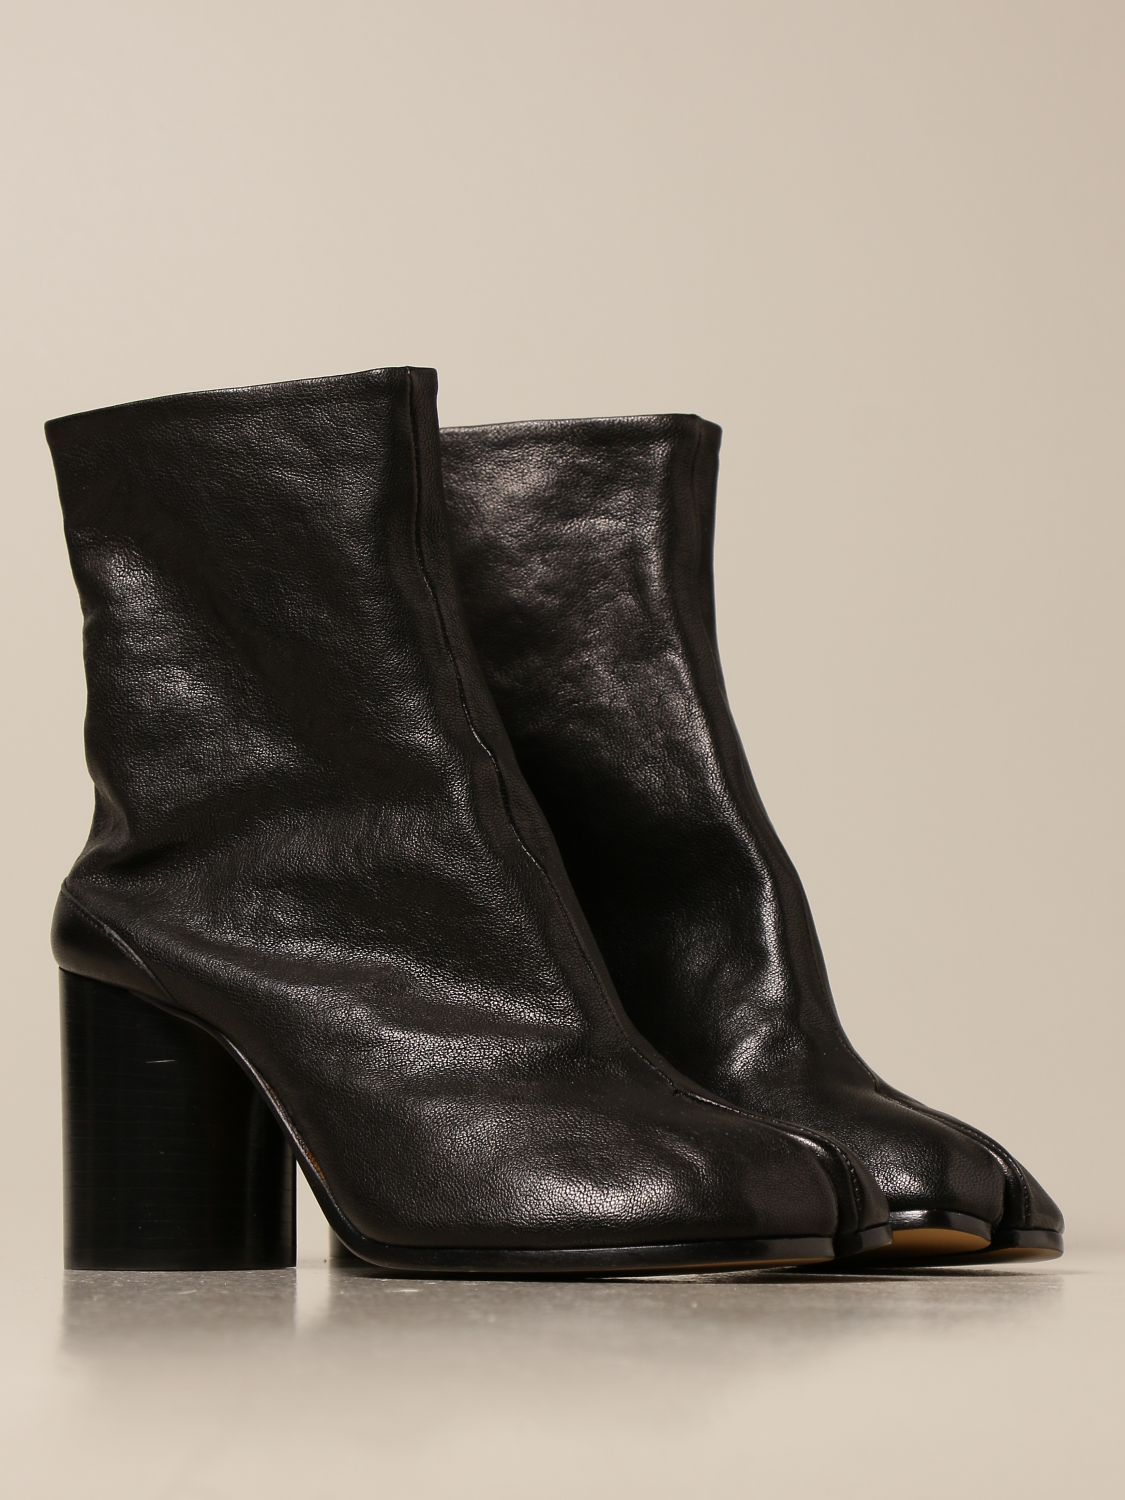 MAISON MARGIELA: Tabi split leather ankle boot | Heeled Booties Maison Margiela Women Black 2